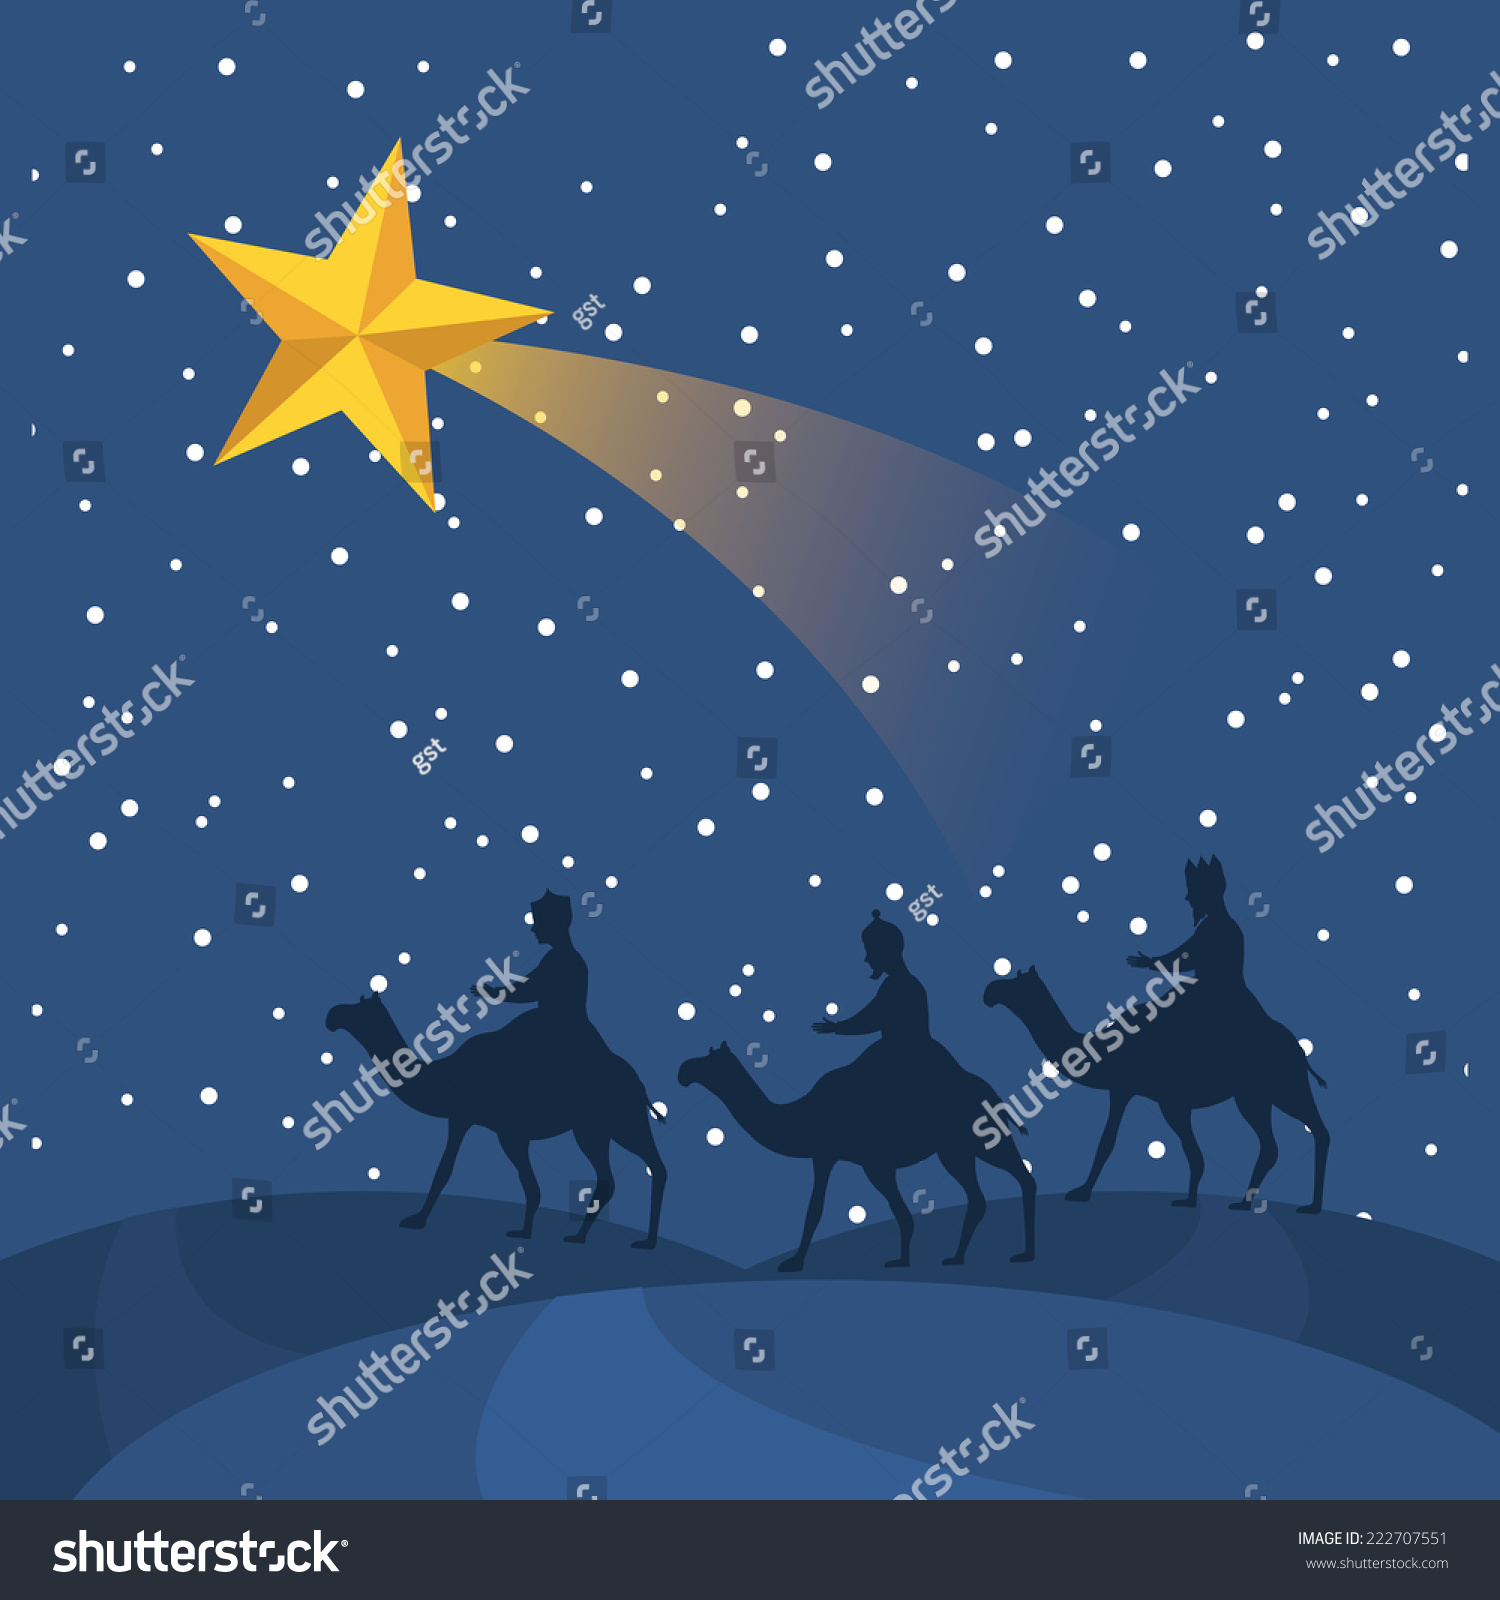 Christmas Graphic Design , Vector Illustration - 222707551 : Shutterstock